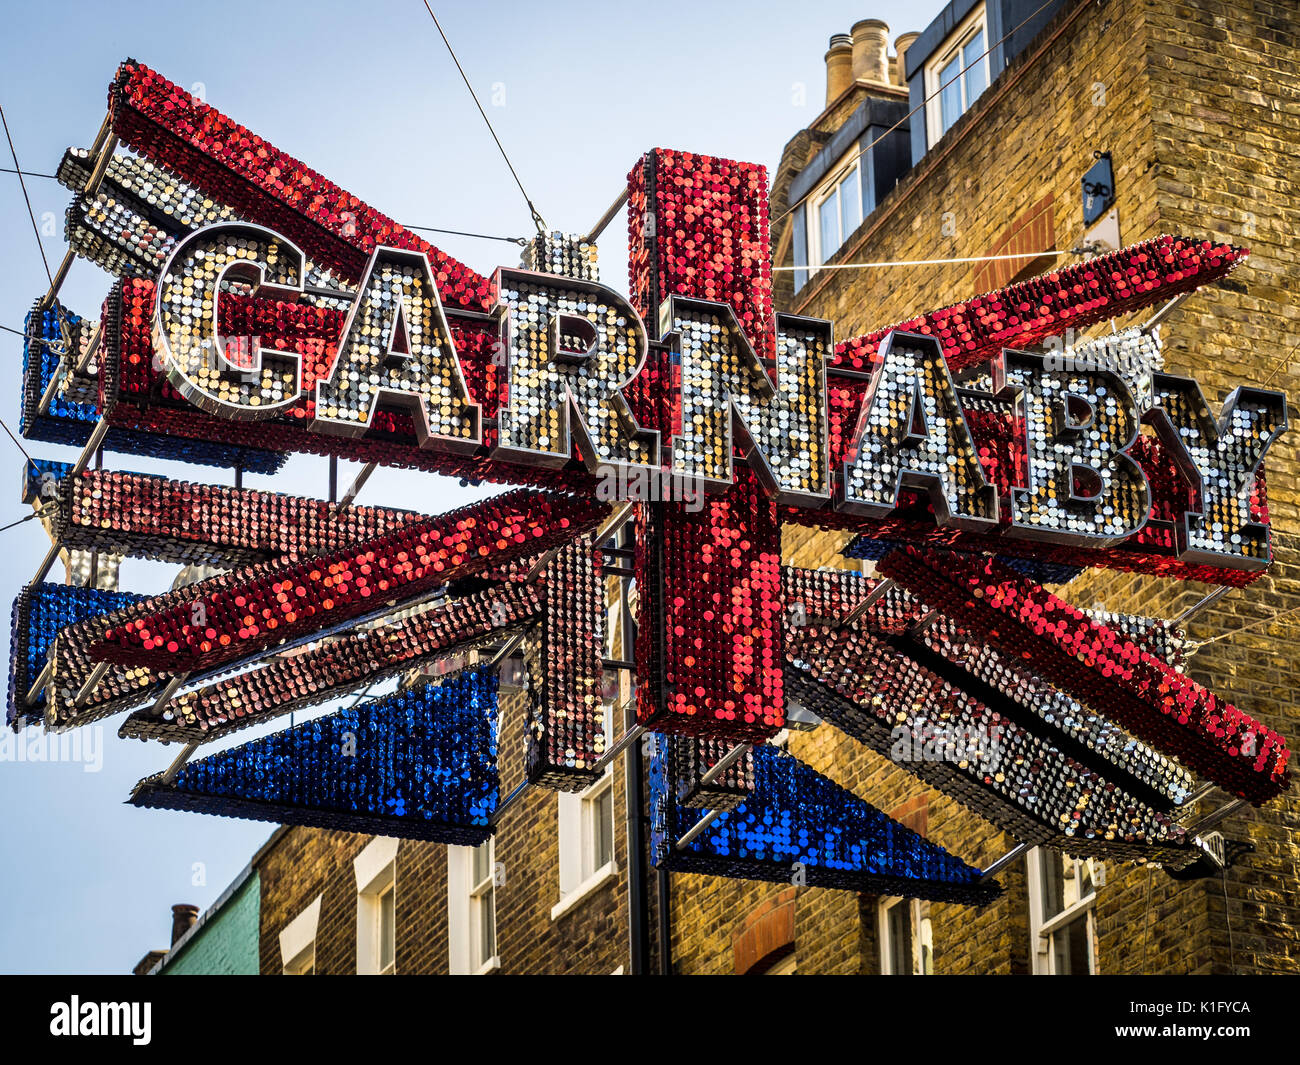 Carnaby Street London - Riesige sequinned Union Jack über berühmten Londoner Carnaby Street fashion street hängt Stockfoto